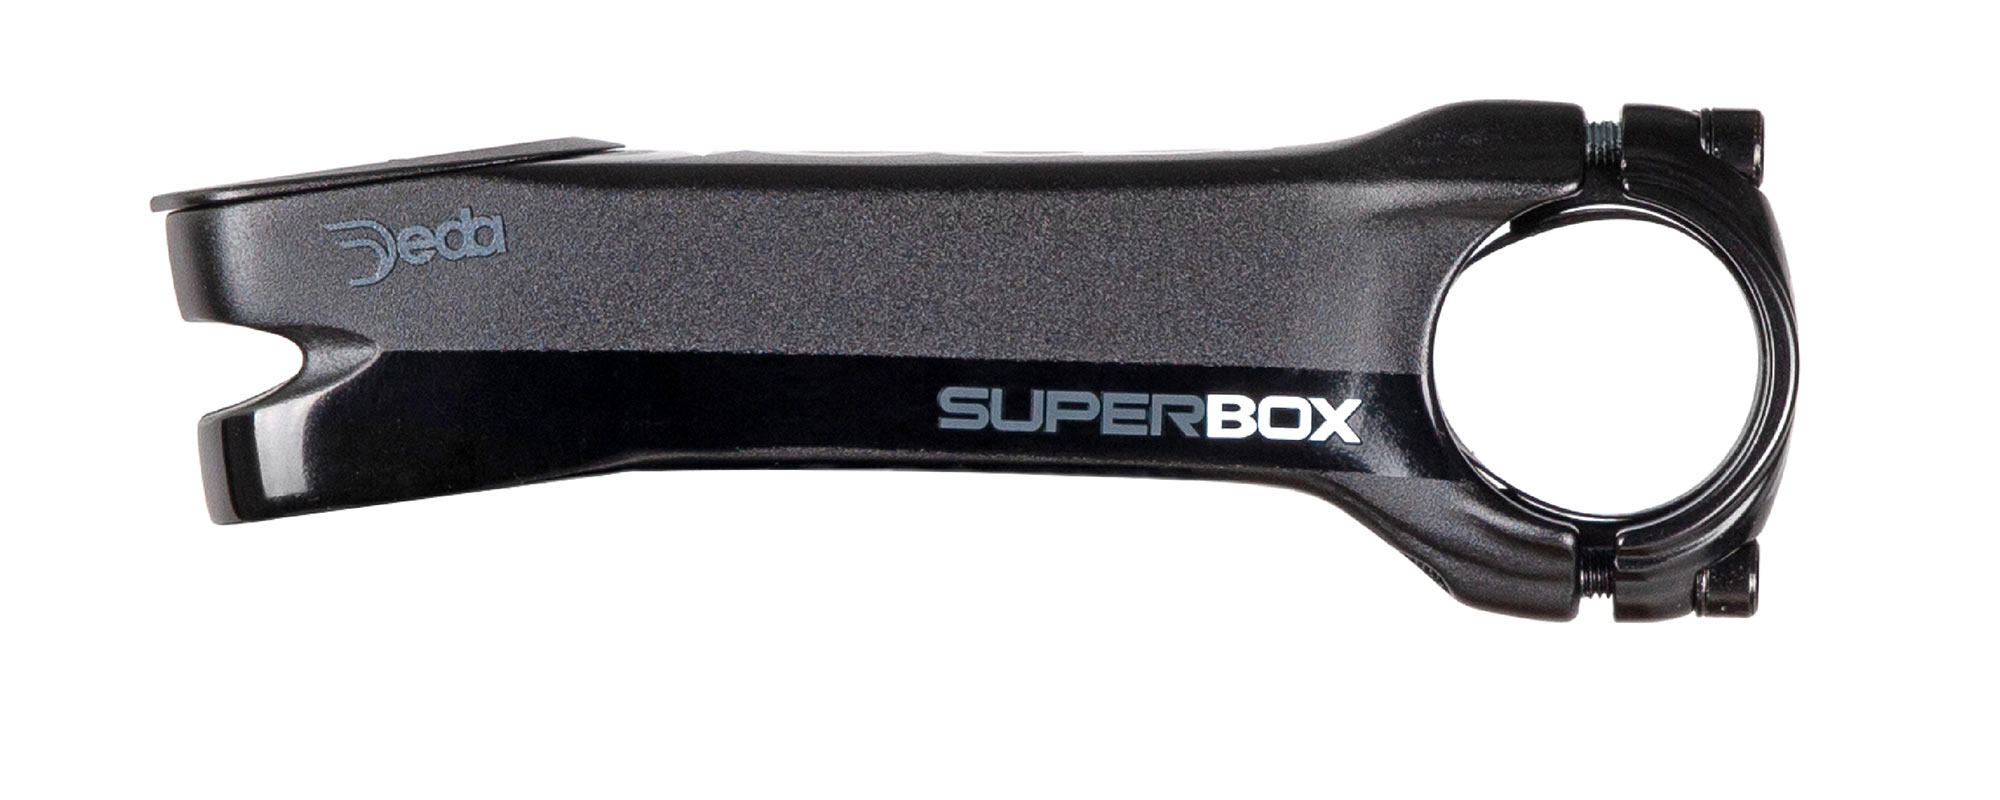 Deda Superbox DCR flexible integrated stem, internal or external routing, side